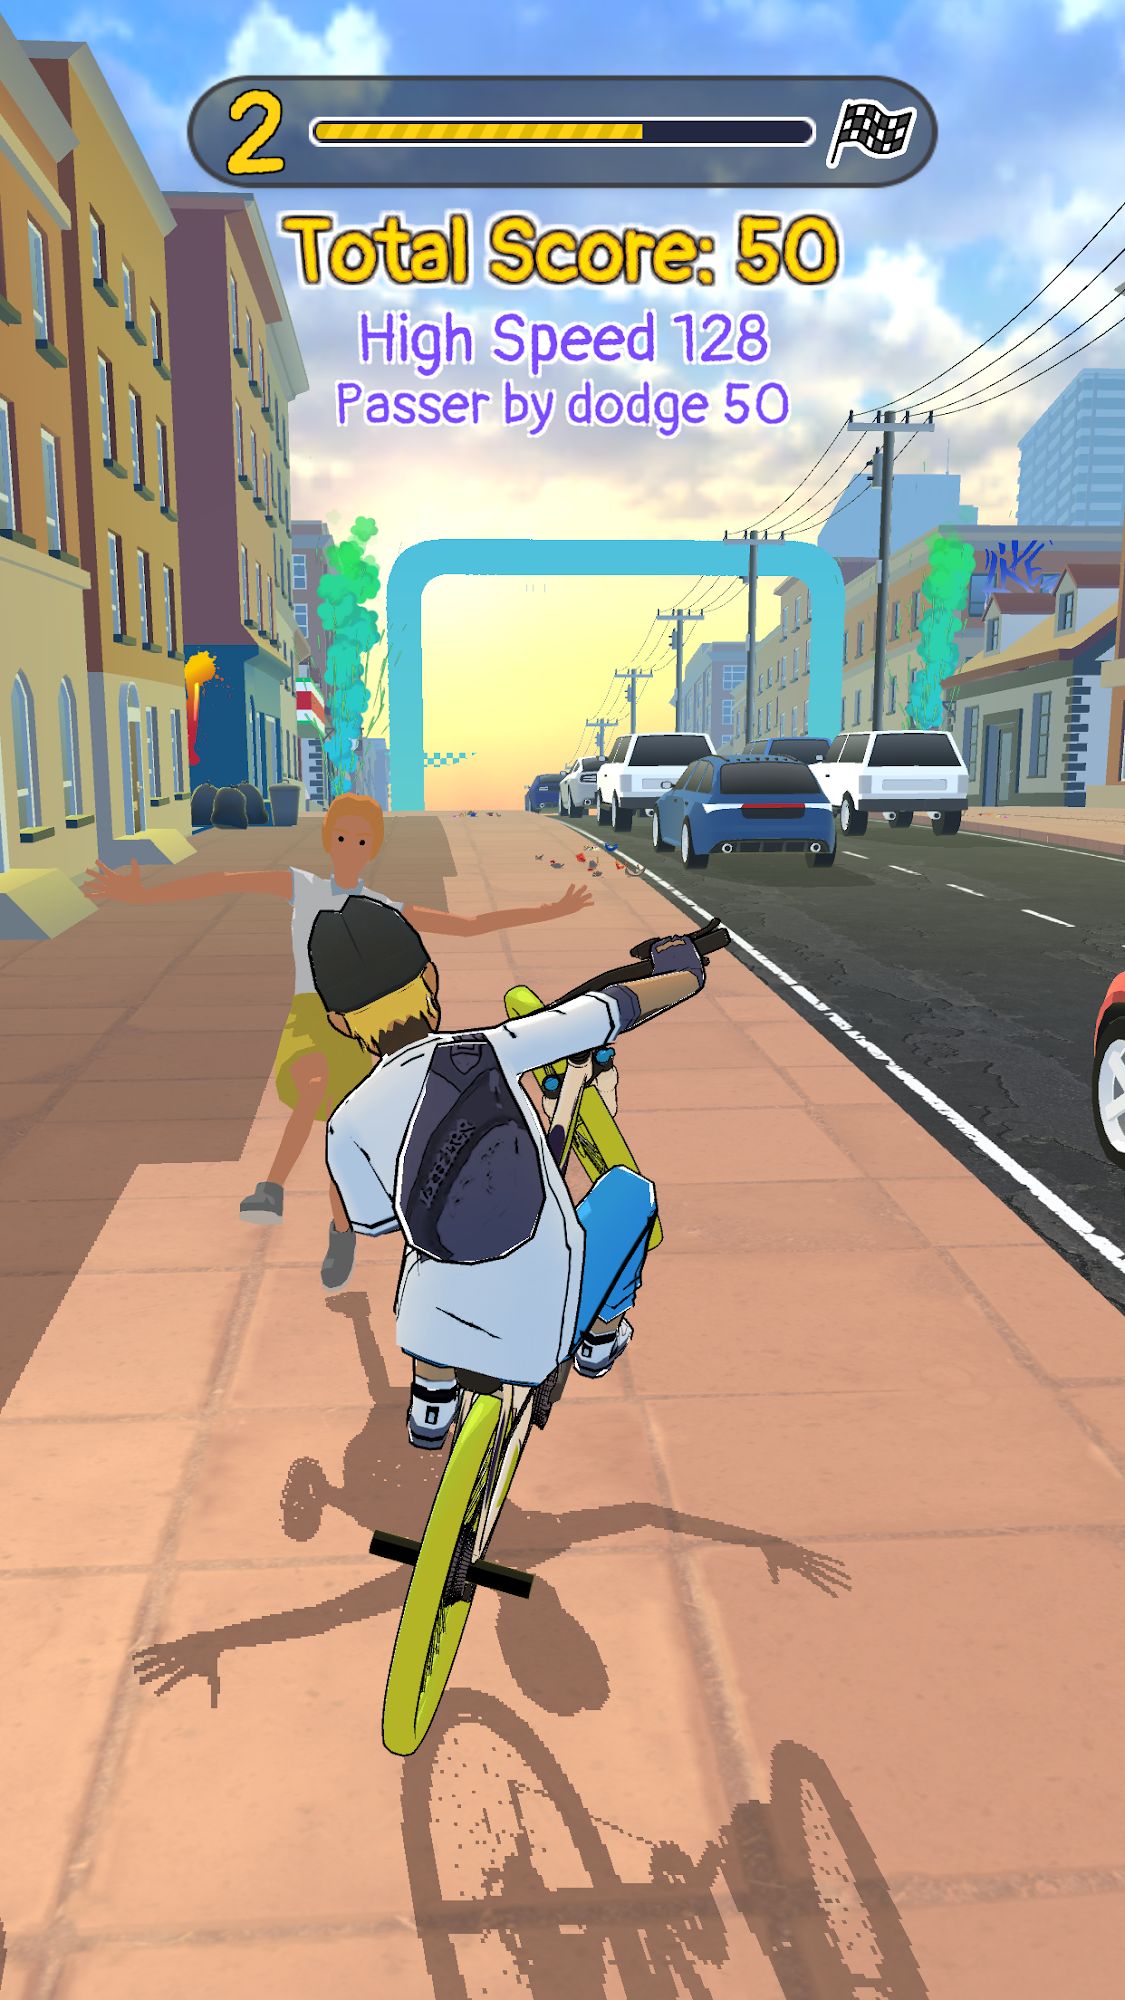 Bike Life! - Android game screenshots.